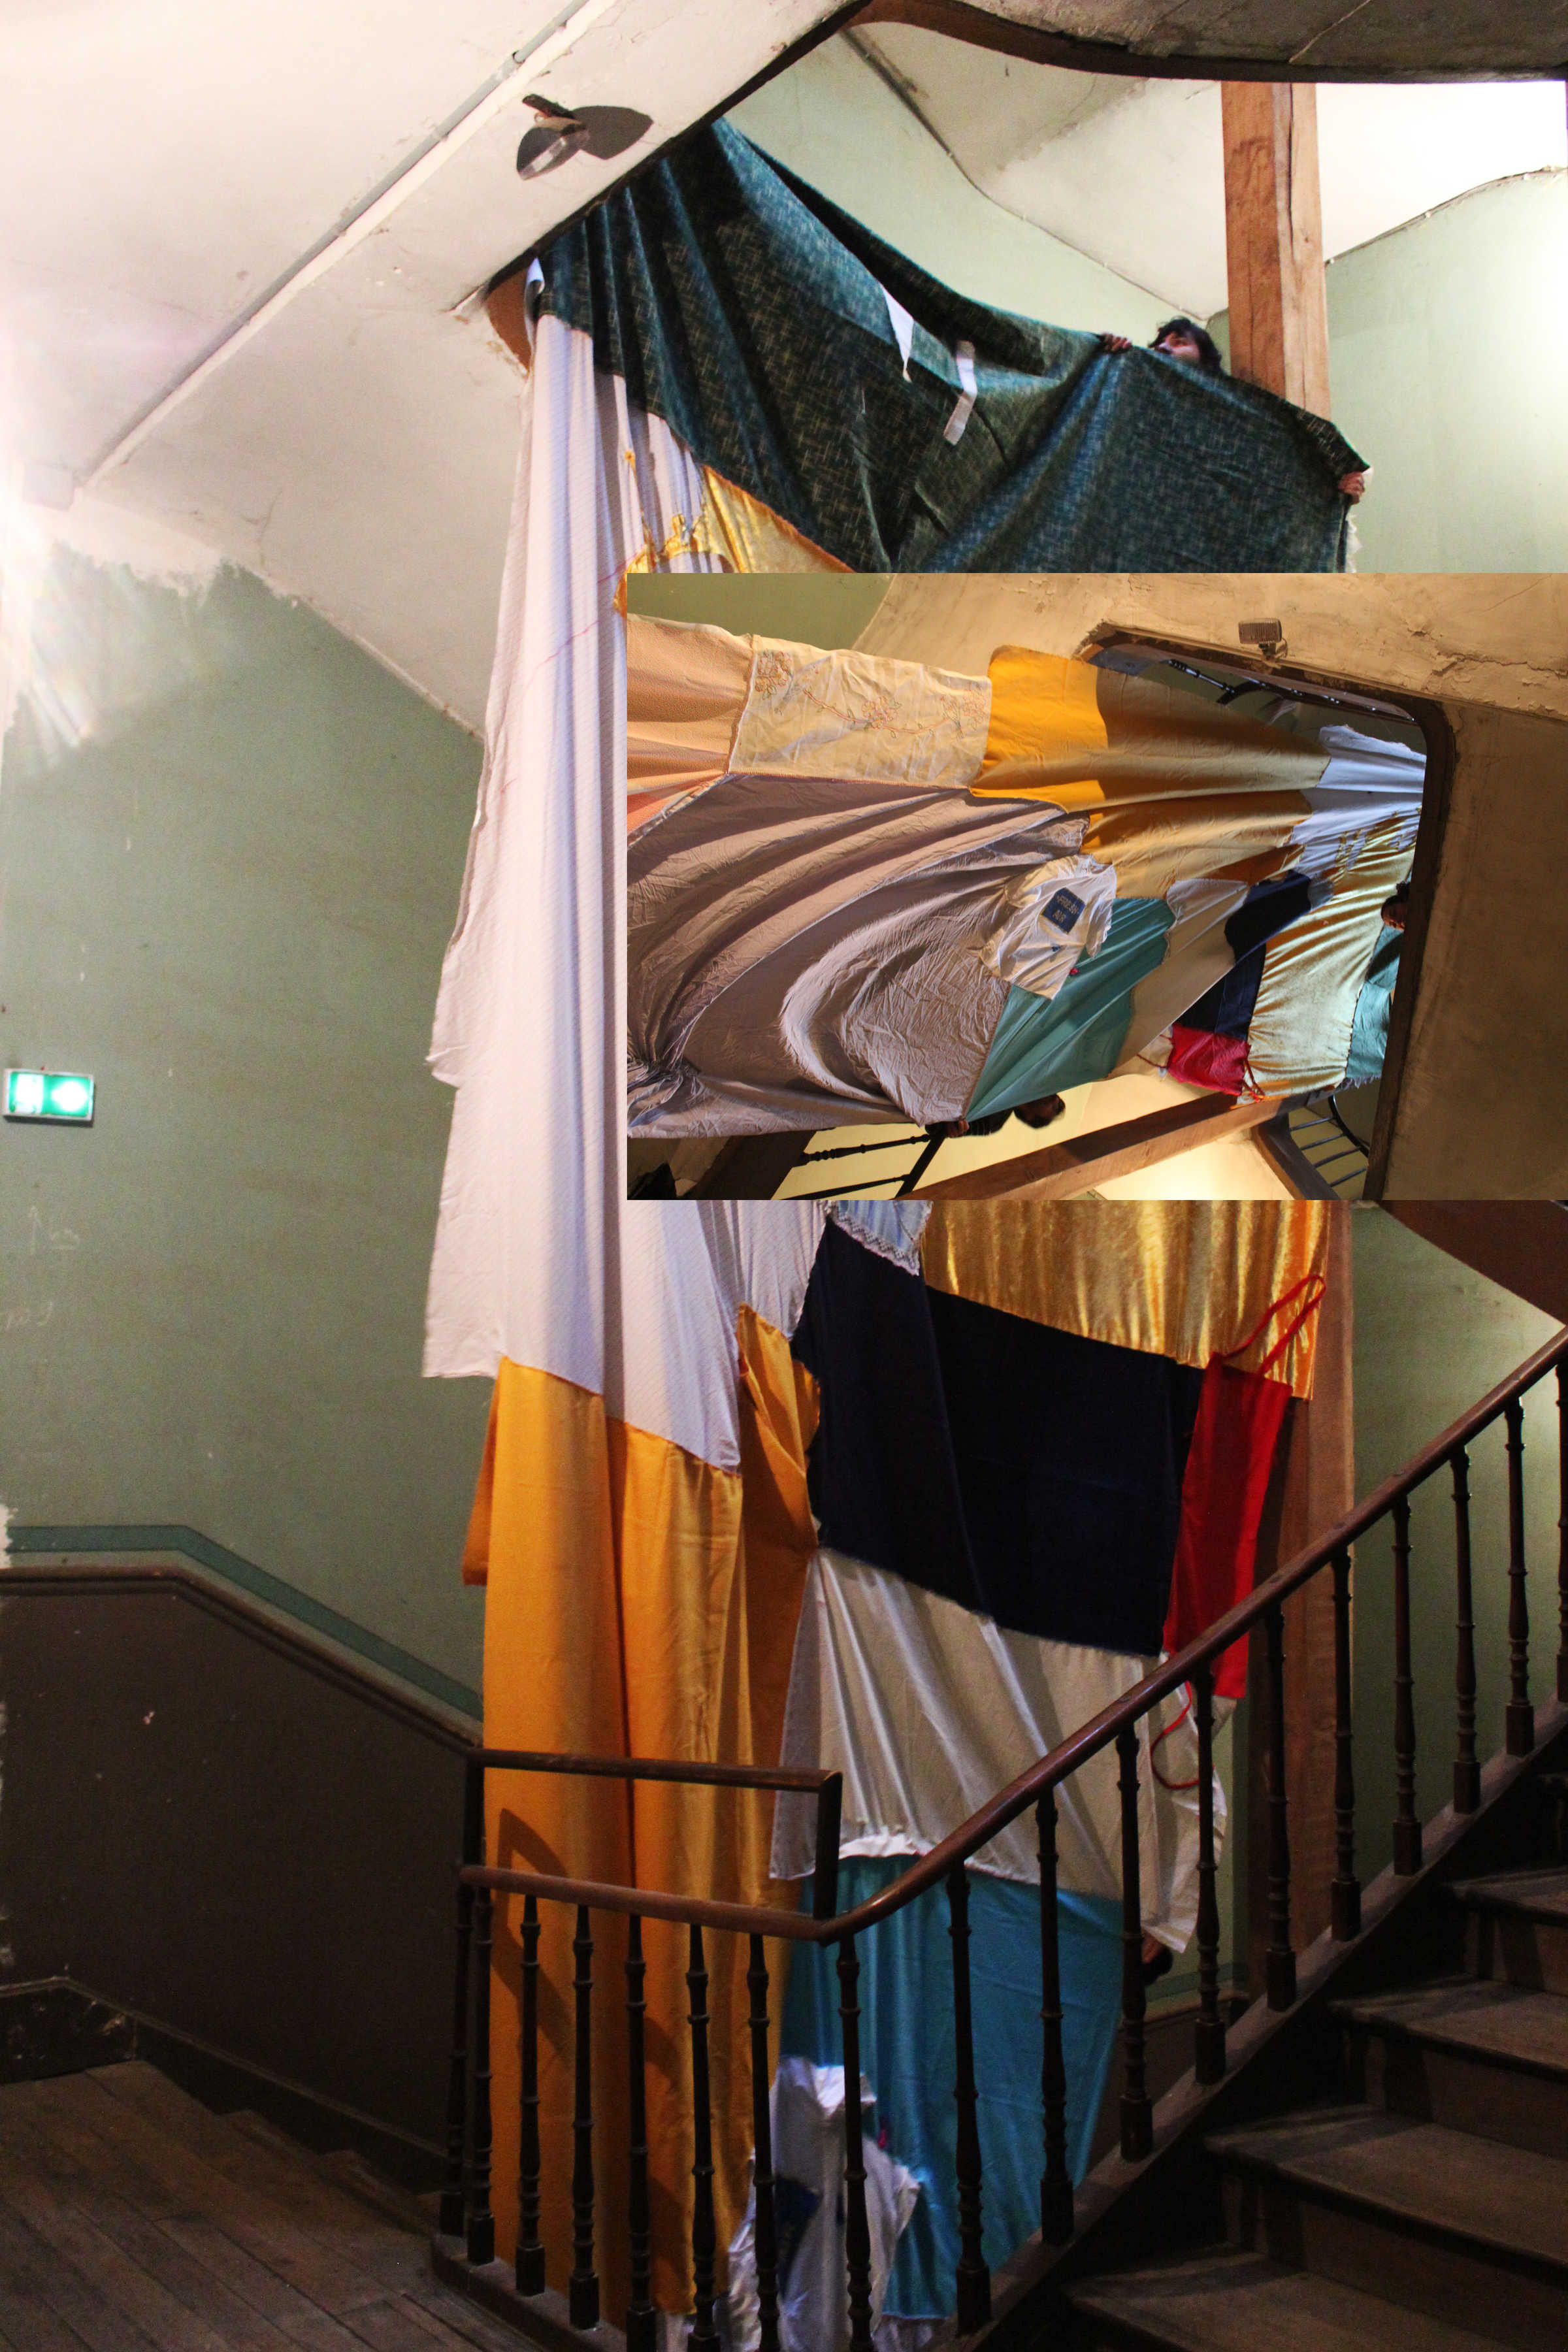 The Art's Room - textile in progress. Credits: Saskia Burggraaf.